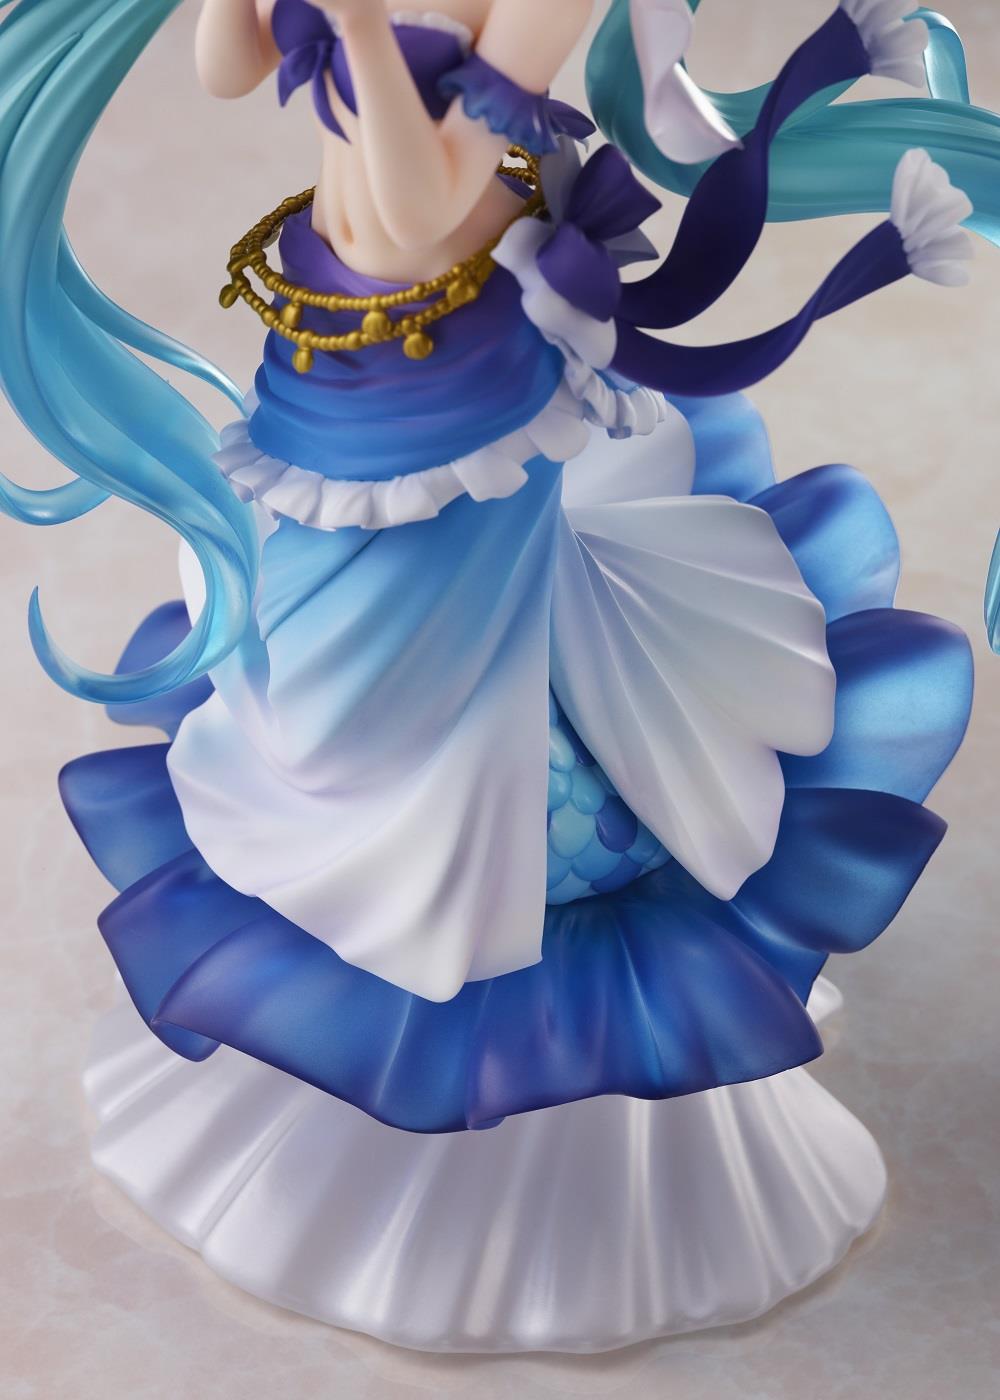 Vocaloid: Hatsune Miku Mermaid Princess Artist Masterpiece Prize Figure